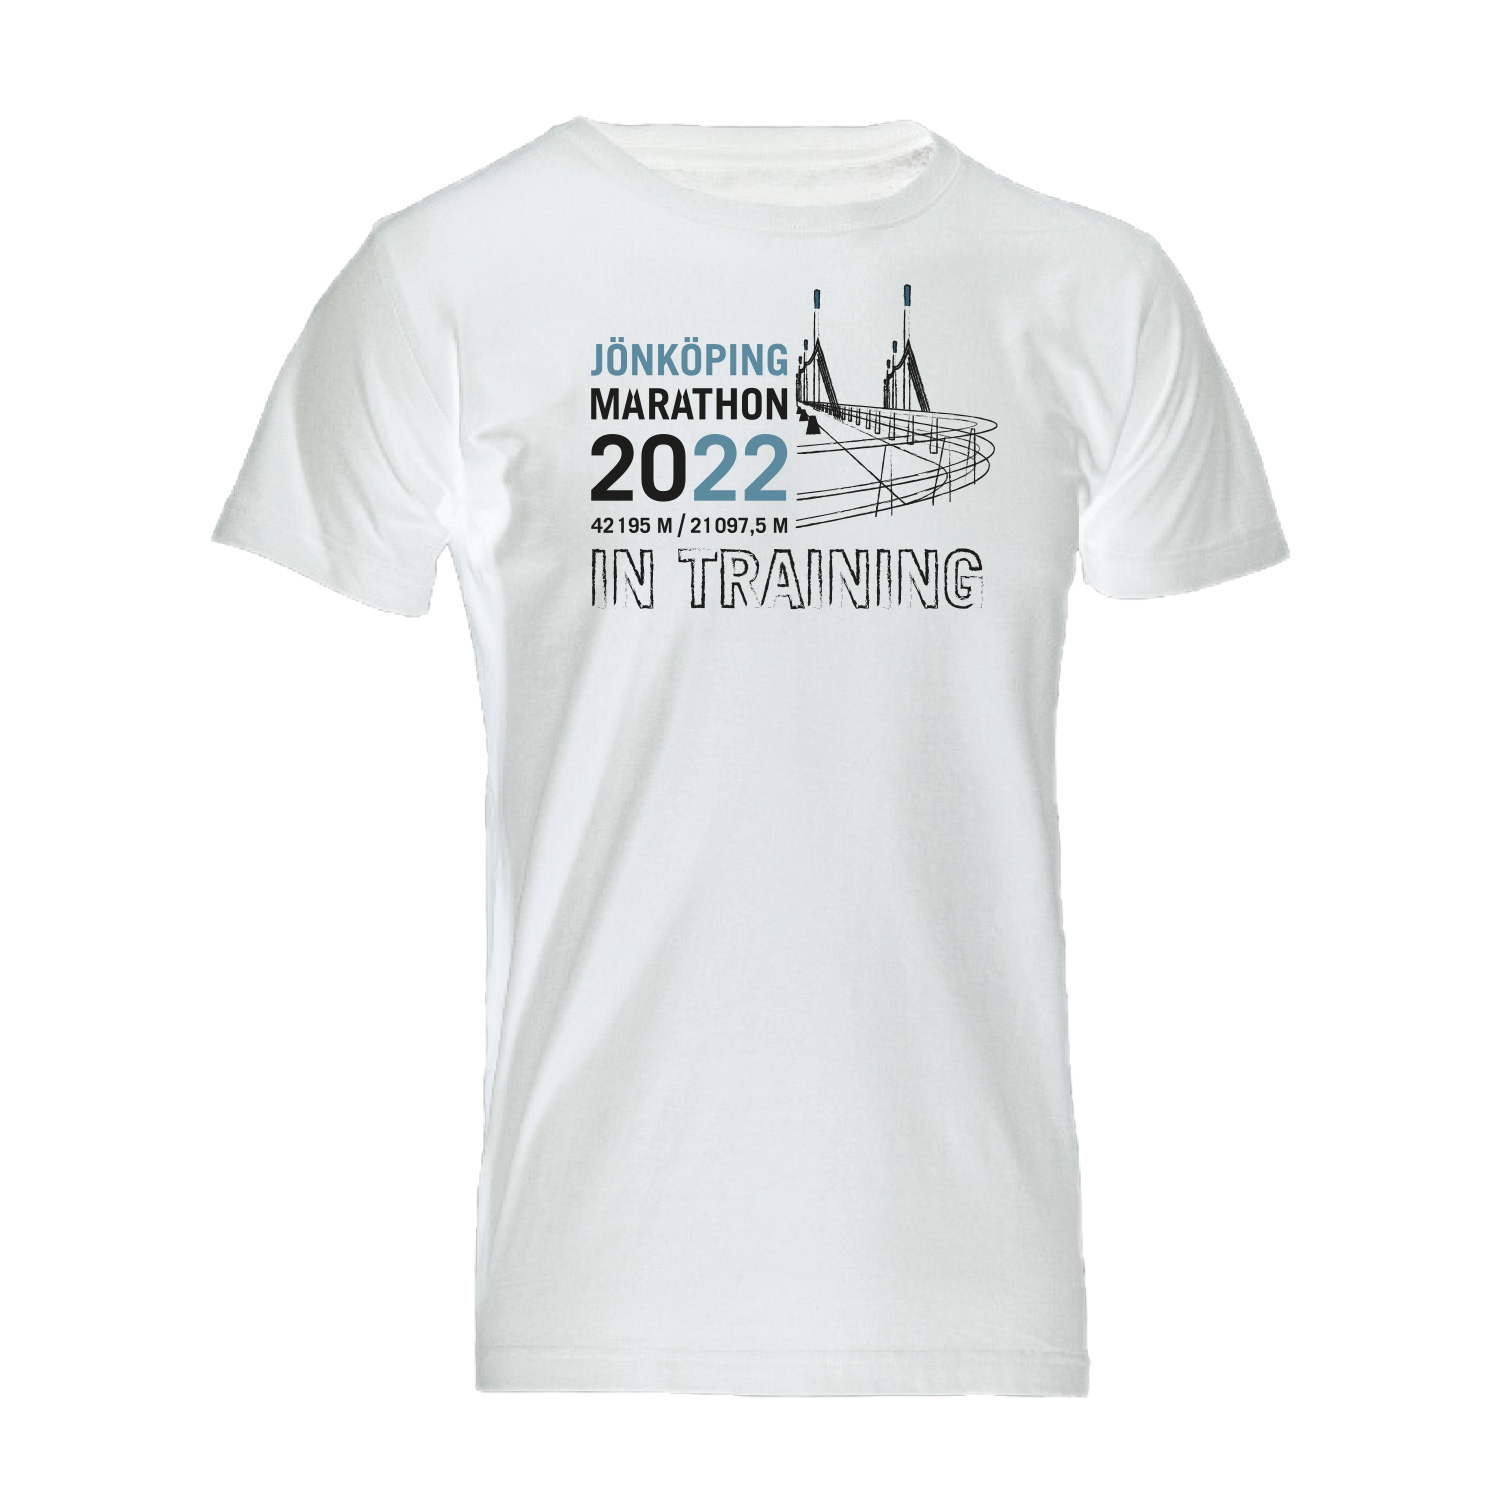 Jönköping marathon training T-shirt